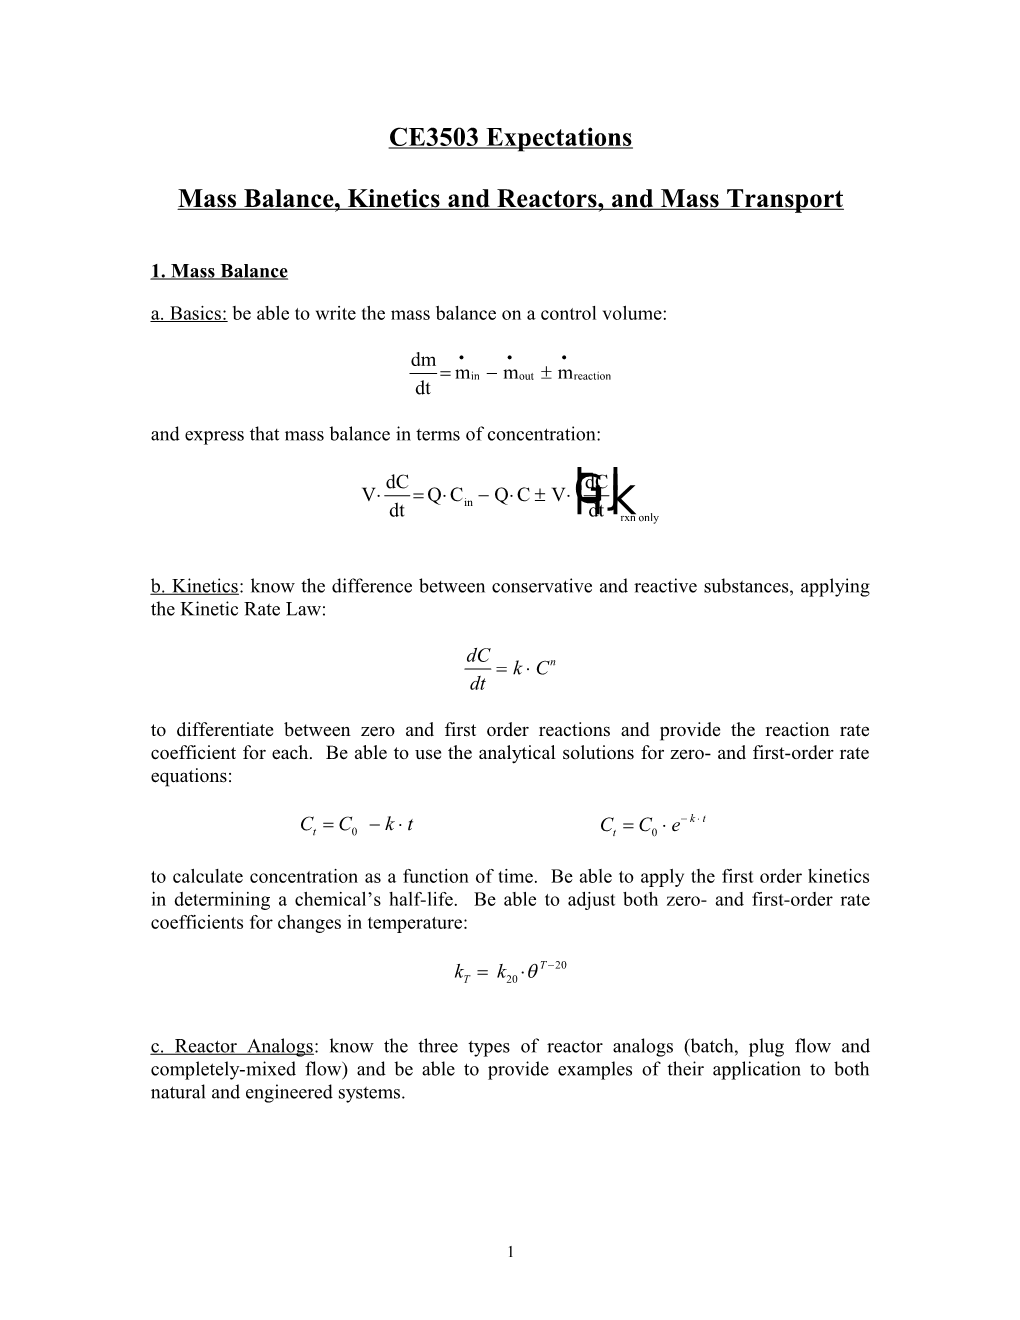 Mass Balance, Kinetics and Reactors, and Mass Transport